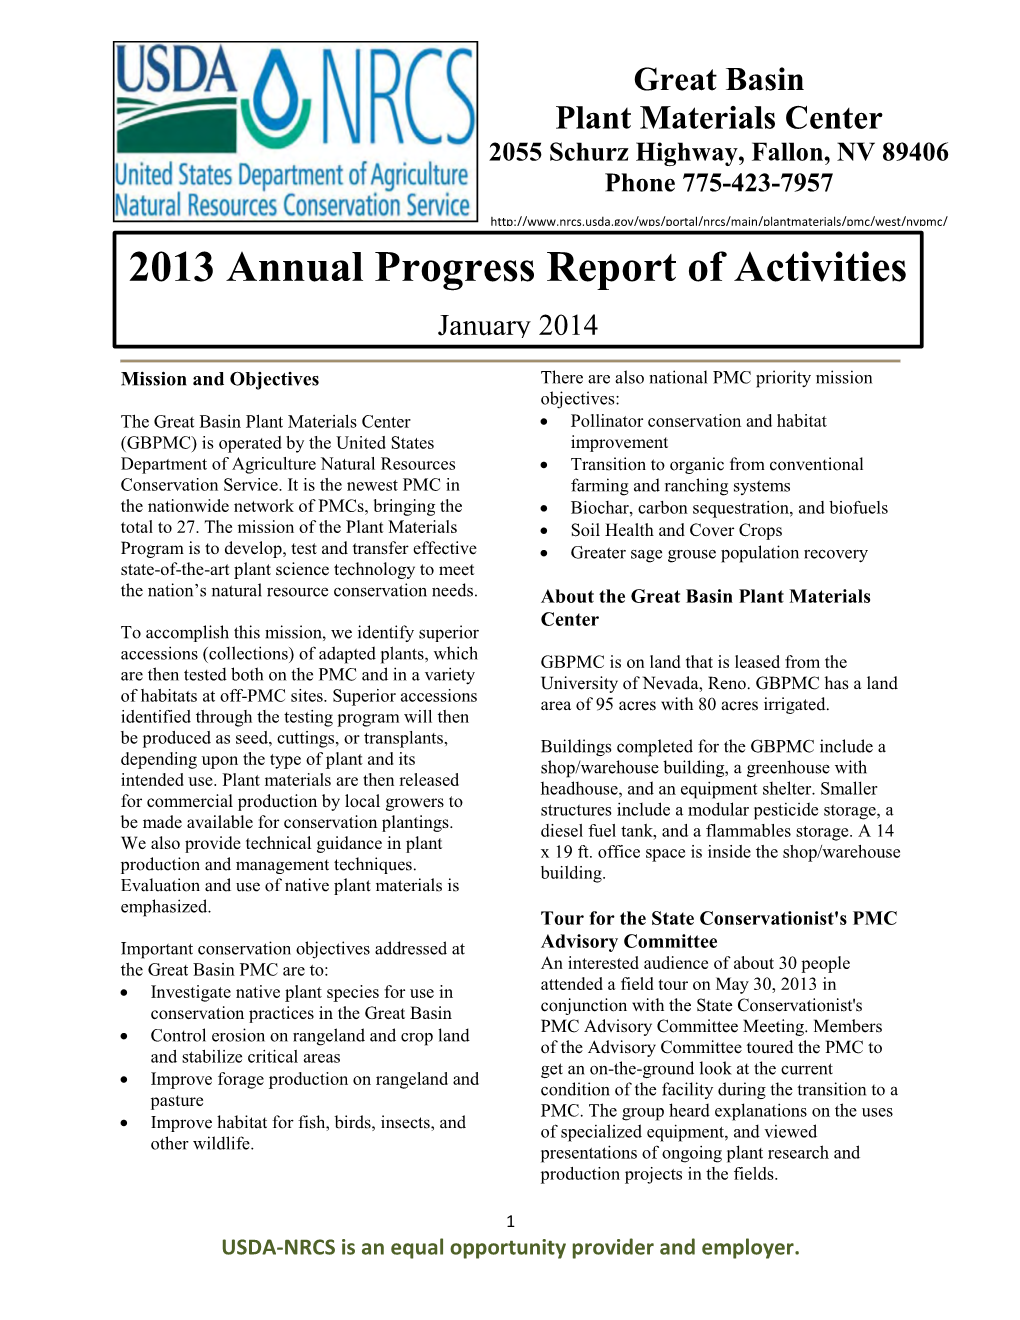 Great Basin Plant Materials Center Annual Progress Report of Activities